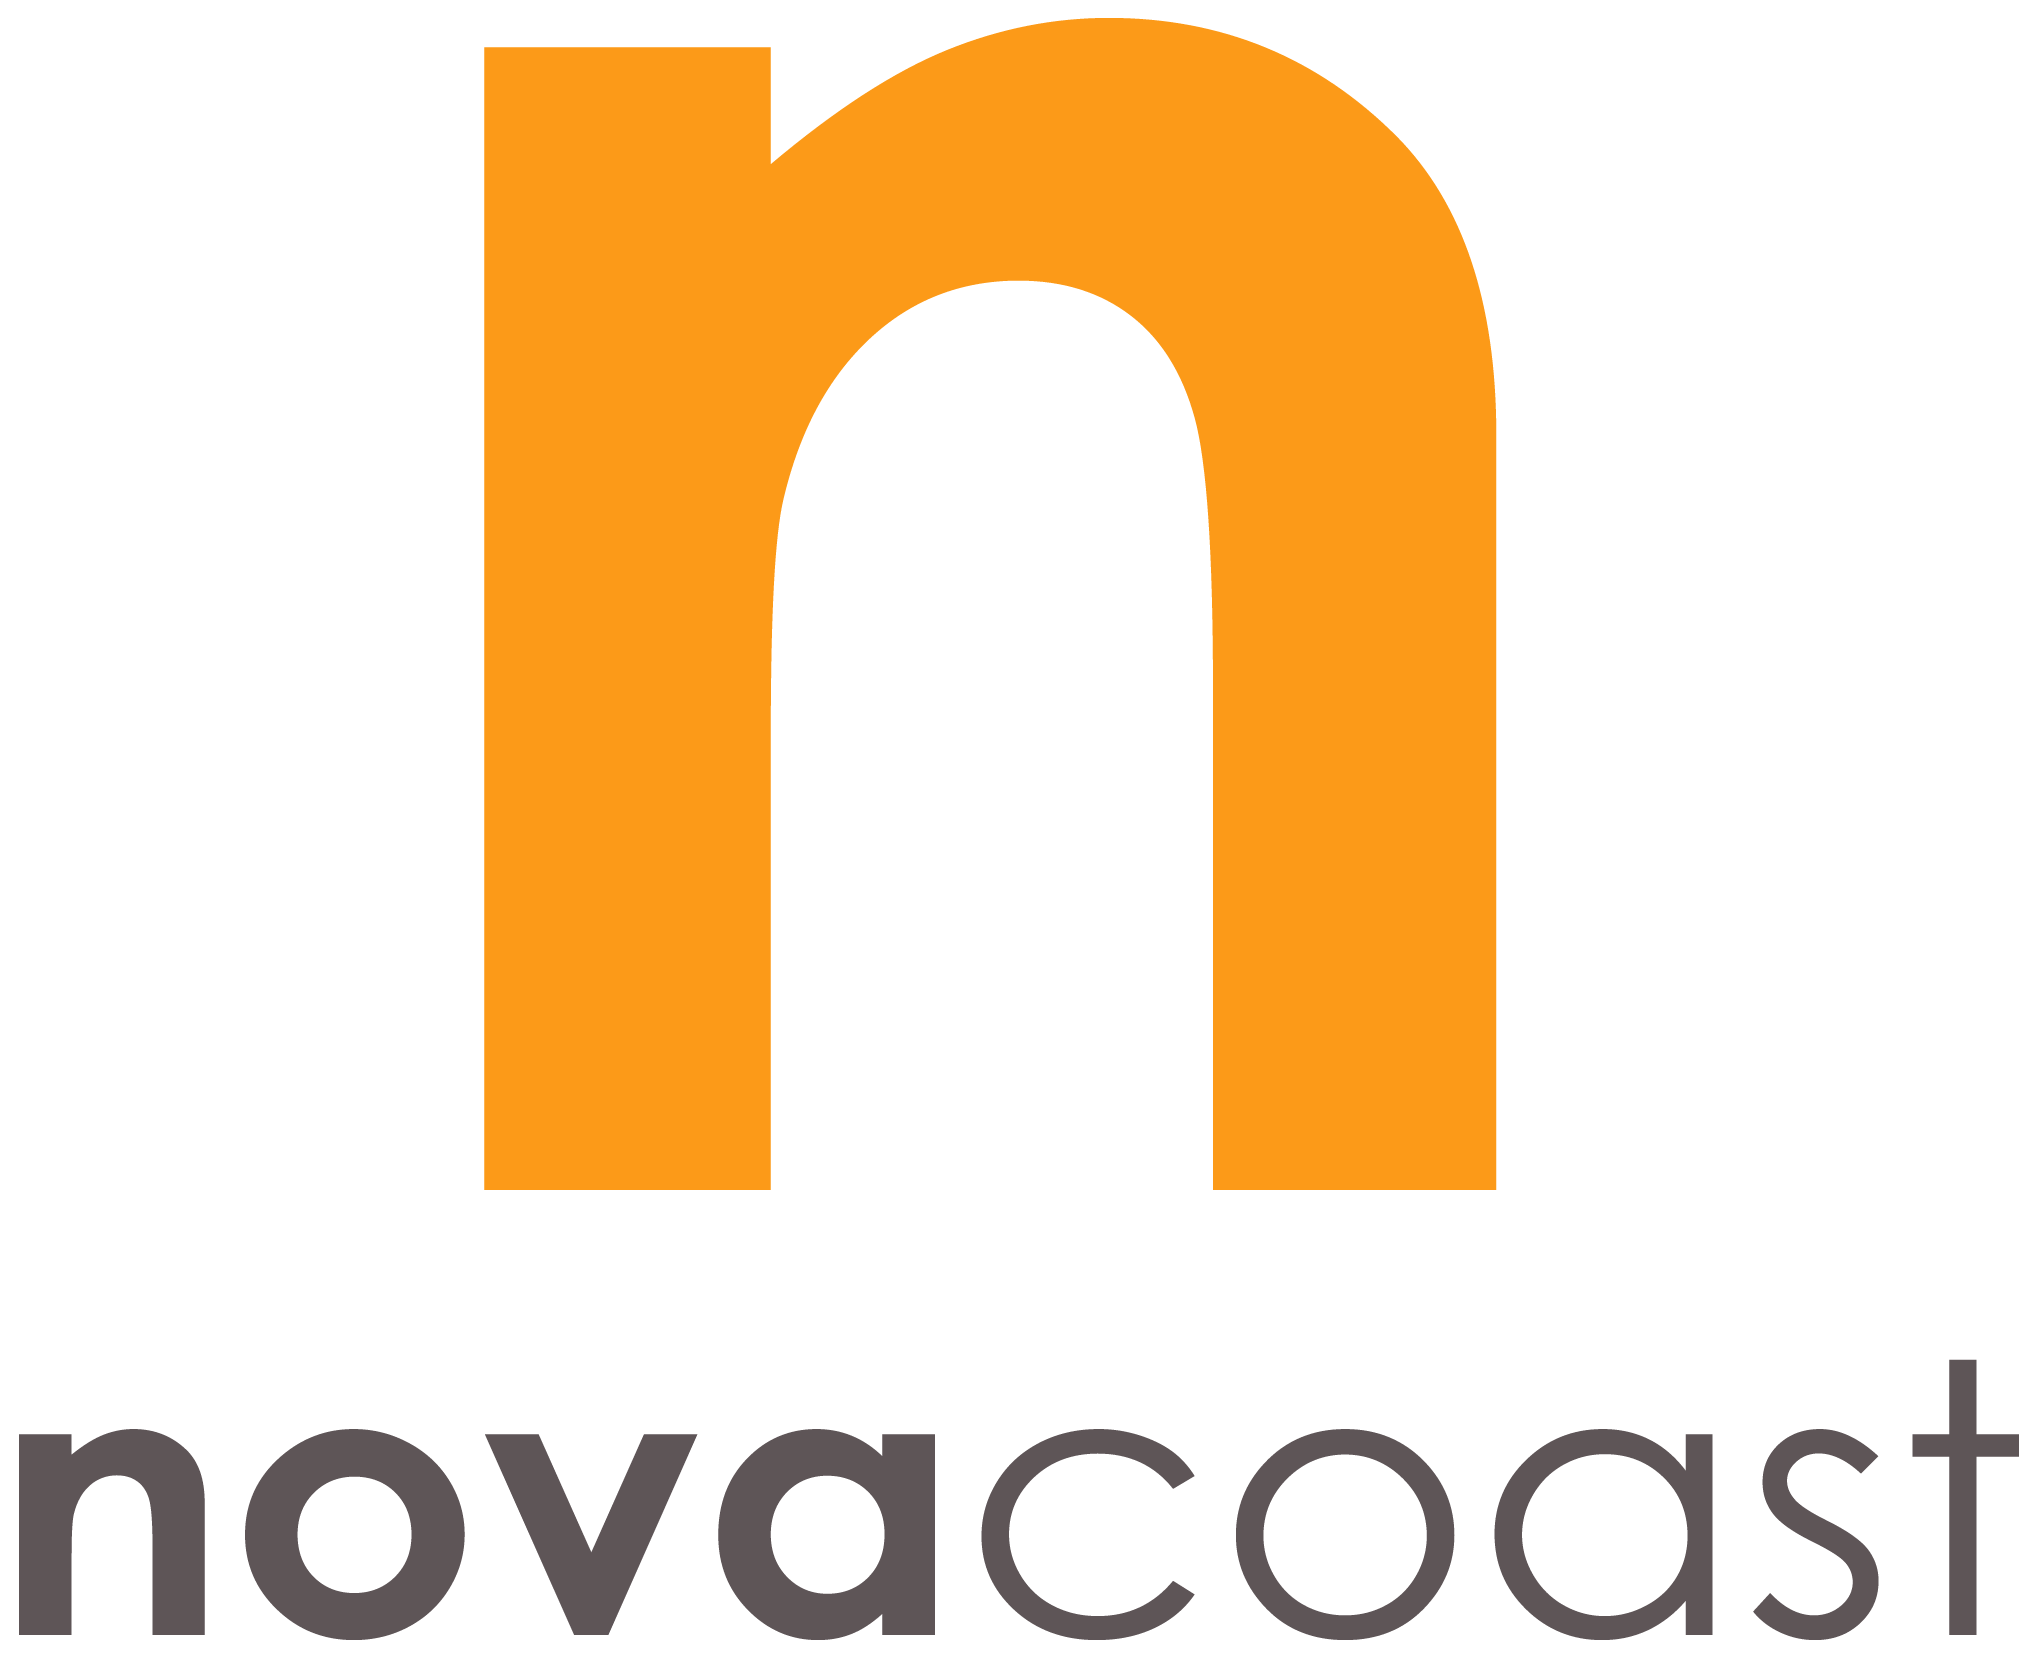 Novacoast Named to MSSP Alert’s Top 250 MSSPs List for 2020